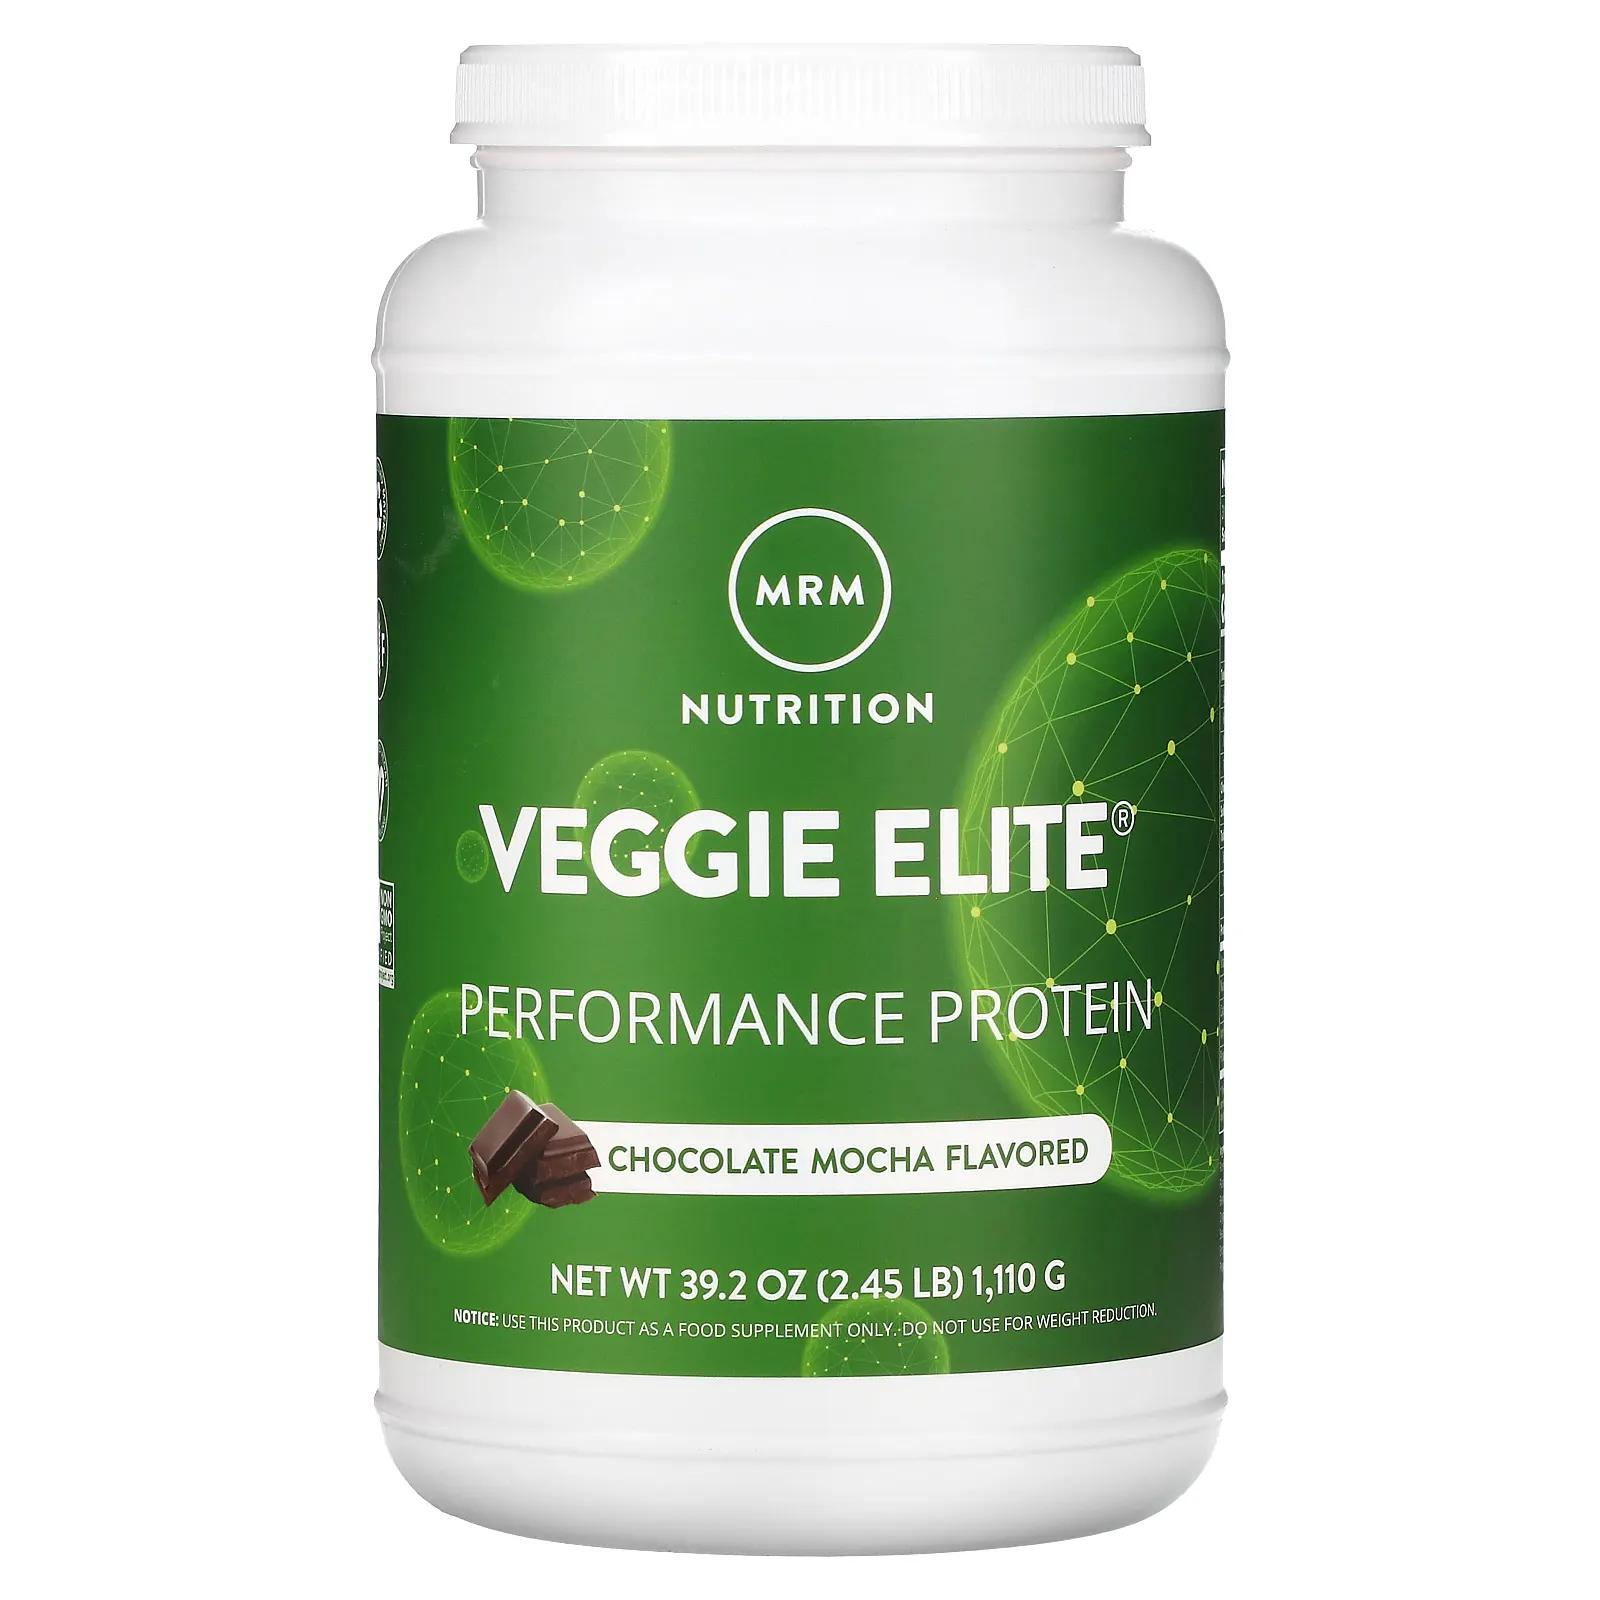 MRM Veggie Elite Performance Protein шоколадный мокко 39.2 унц. (1,110 г) mrm nutrition veggie elite performance protein ваниль 510 г 1 12 фунта